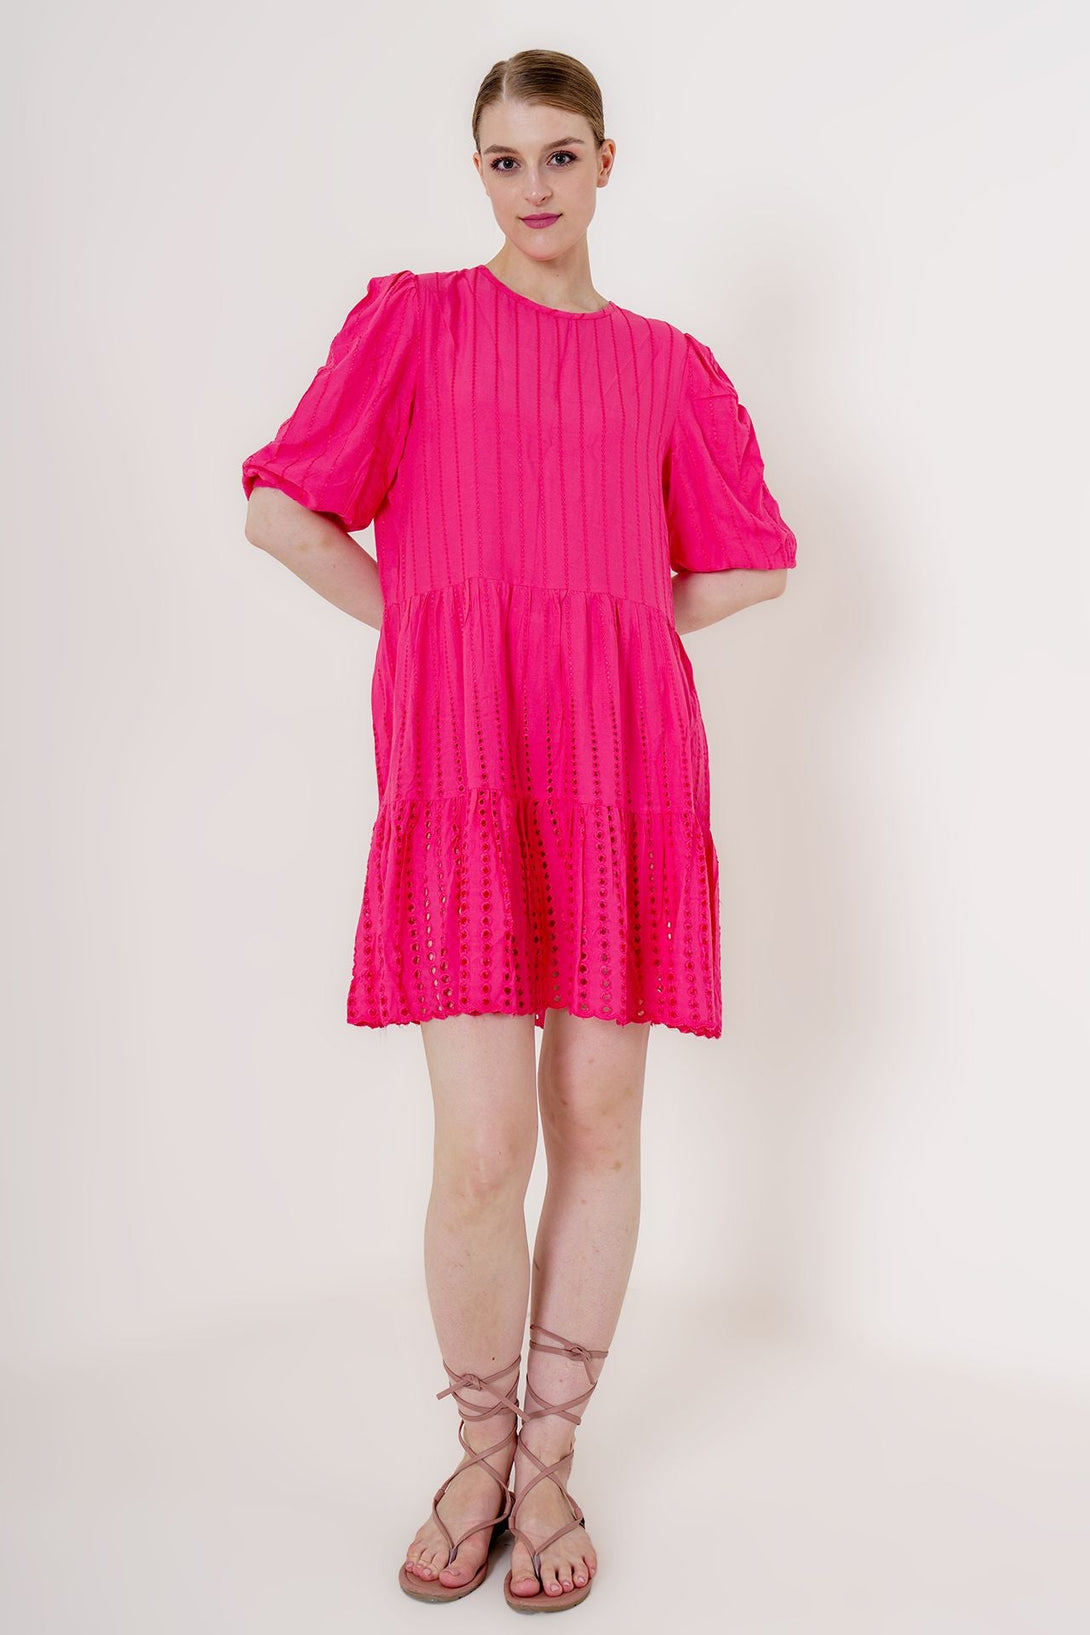 blush pink dress knee length, long sleeve knee length dress, summer midi dress with sleeves,